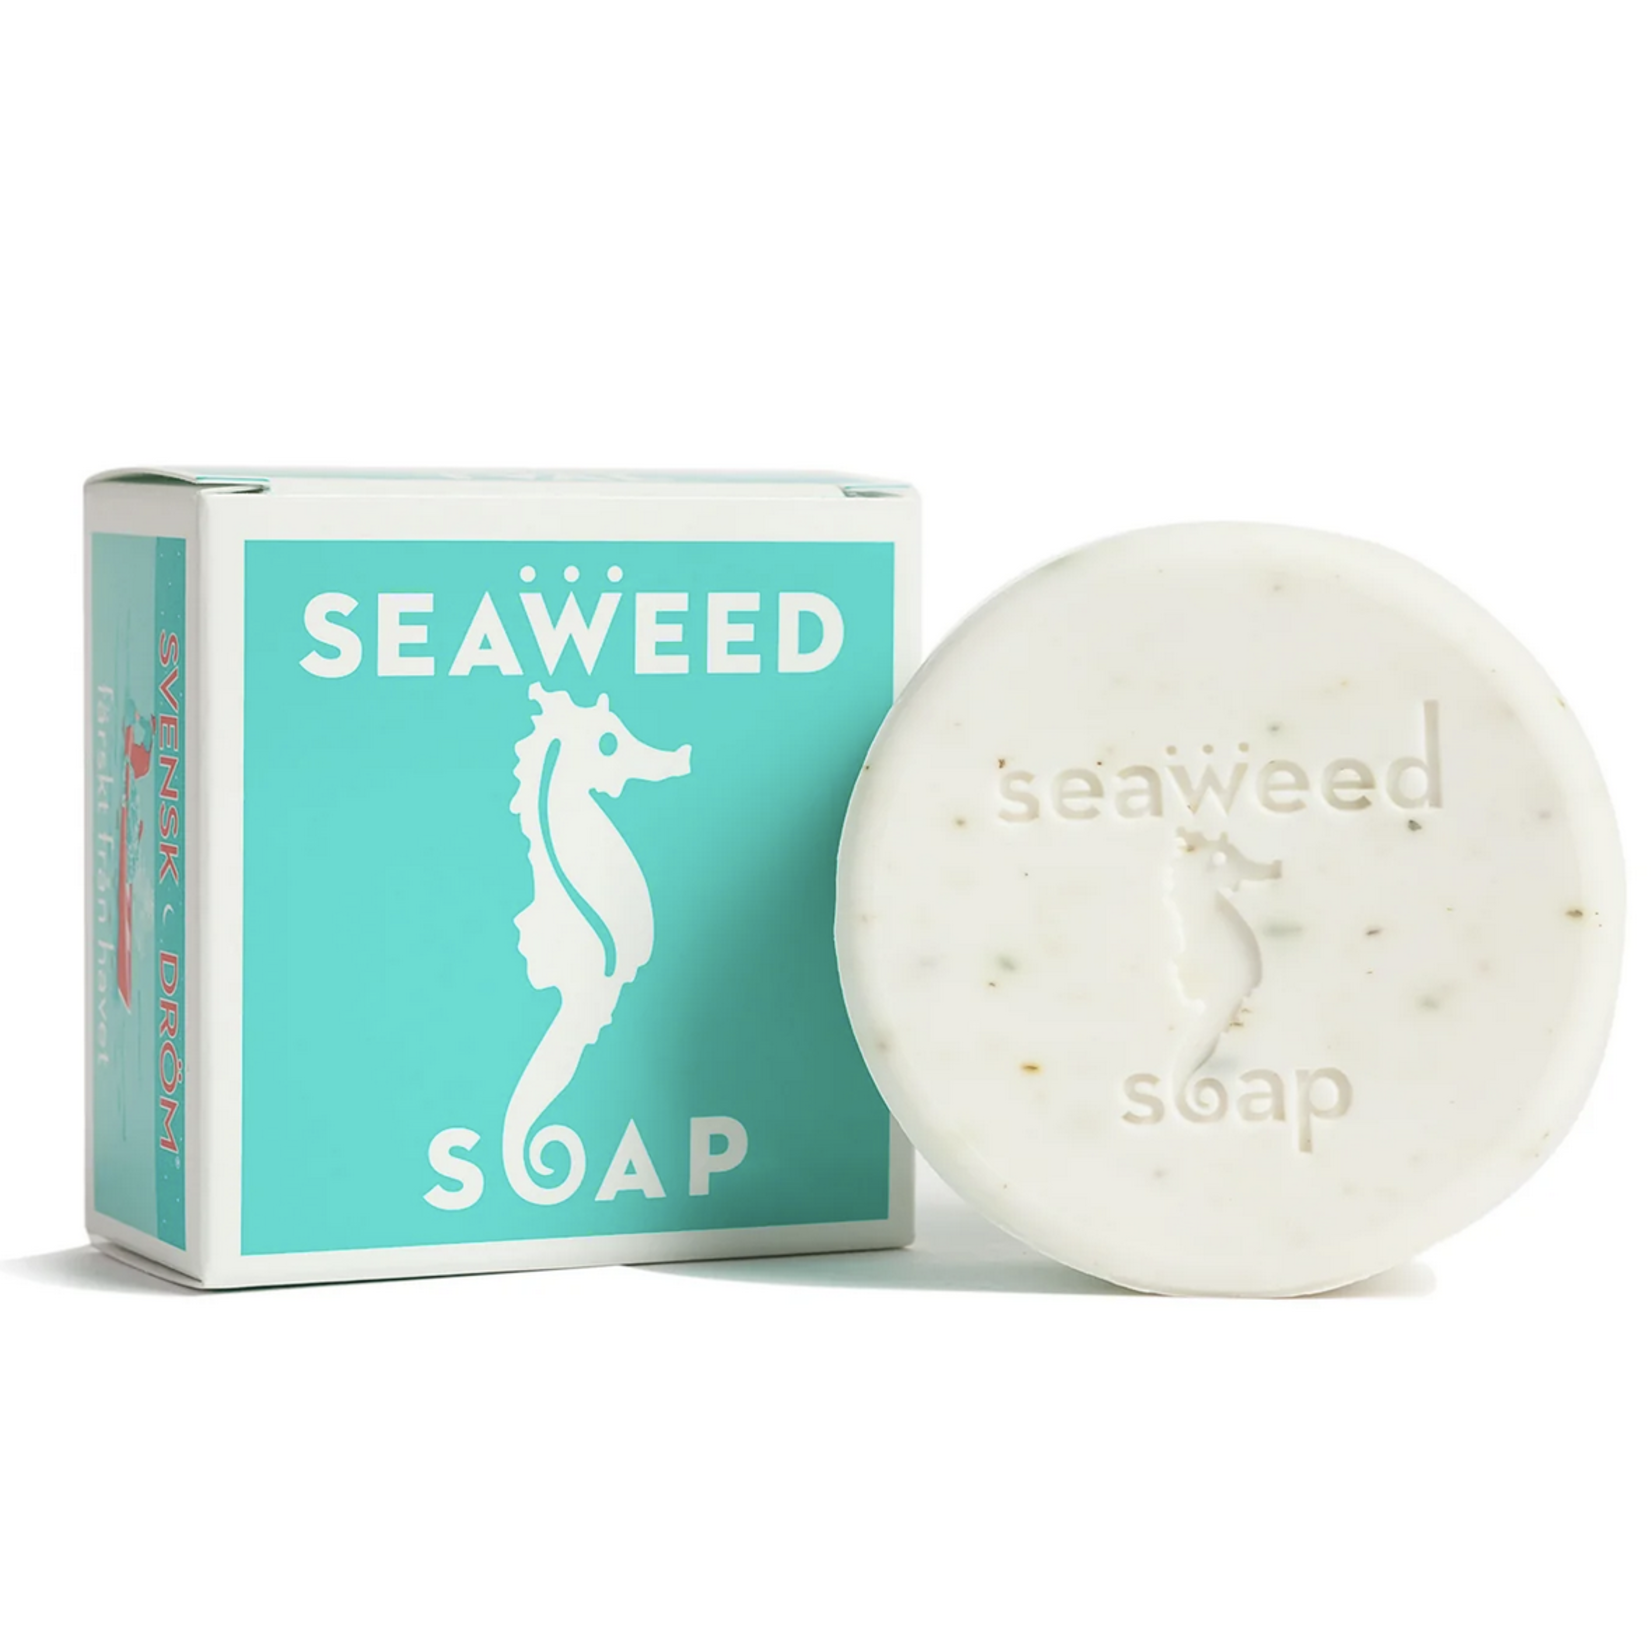 Kalastyle SWEDISH DREAM SEAWEED SOAP